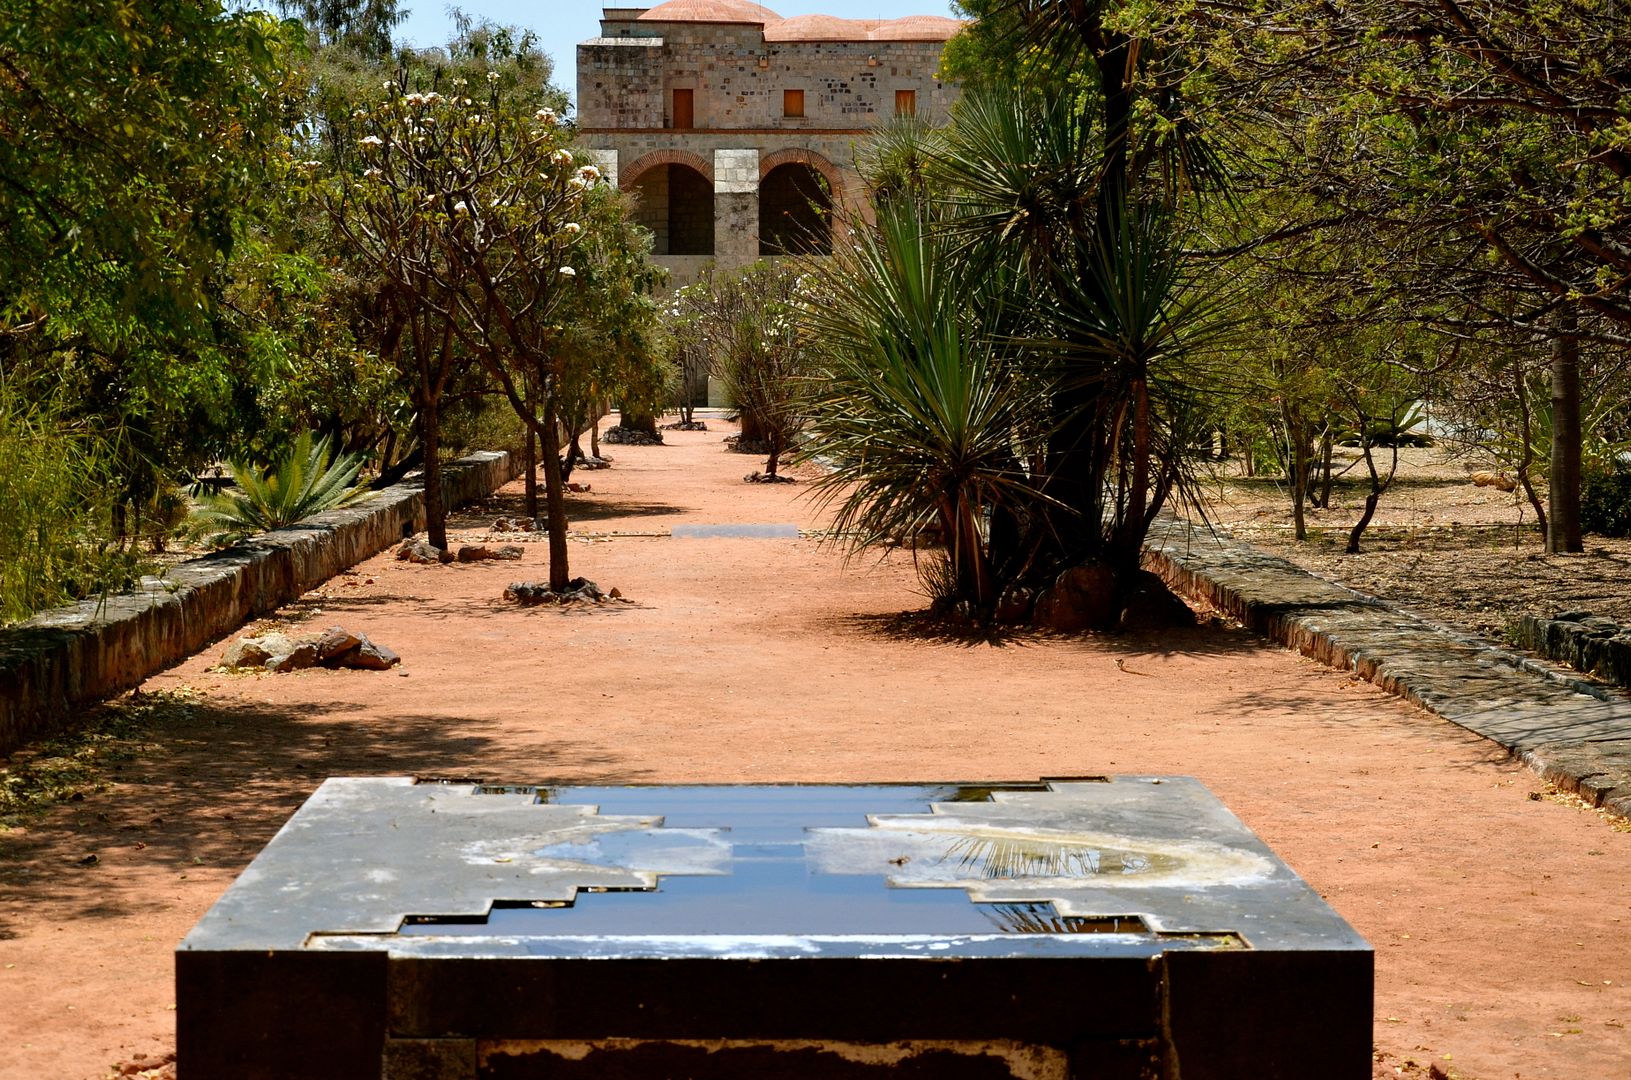 The Ethnobotanical Garden of Oaxaca